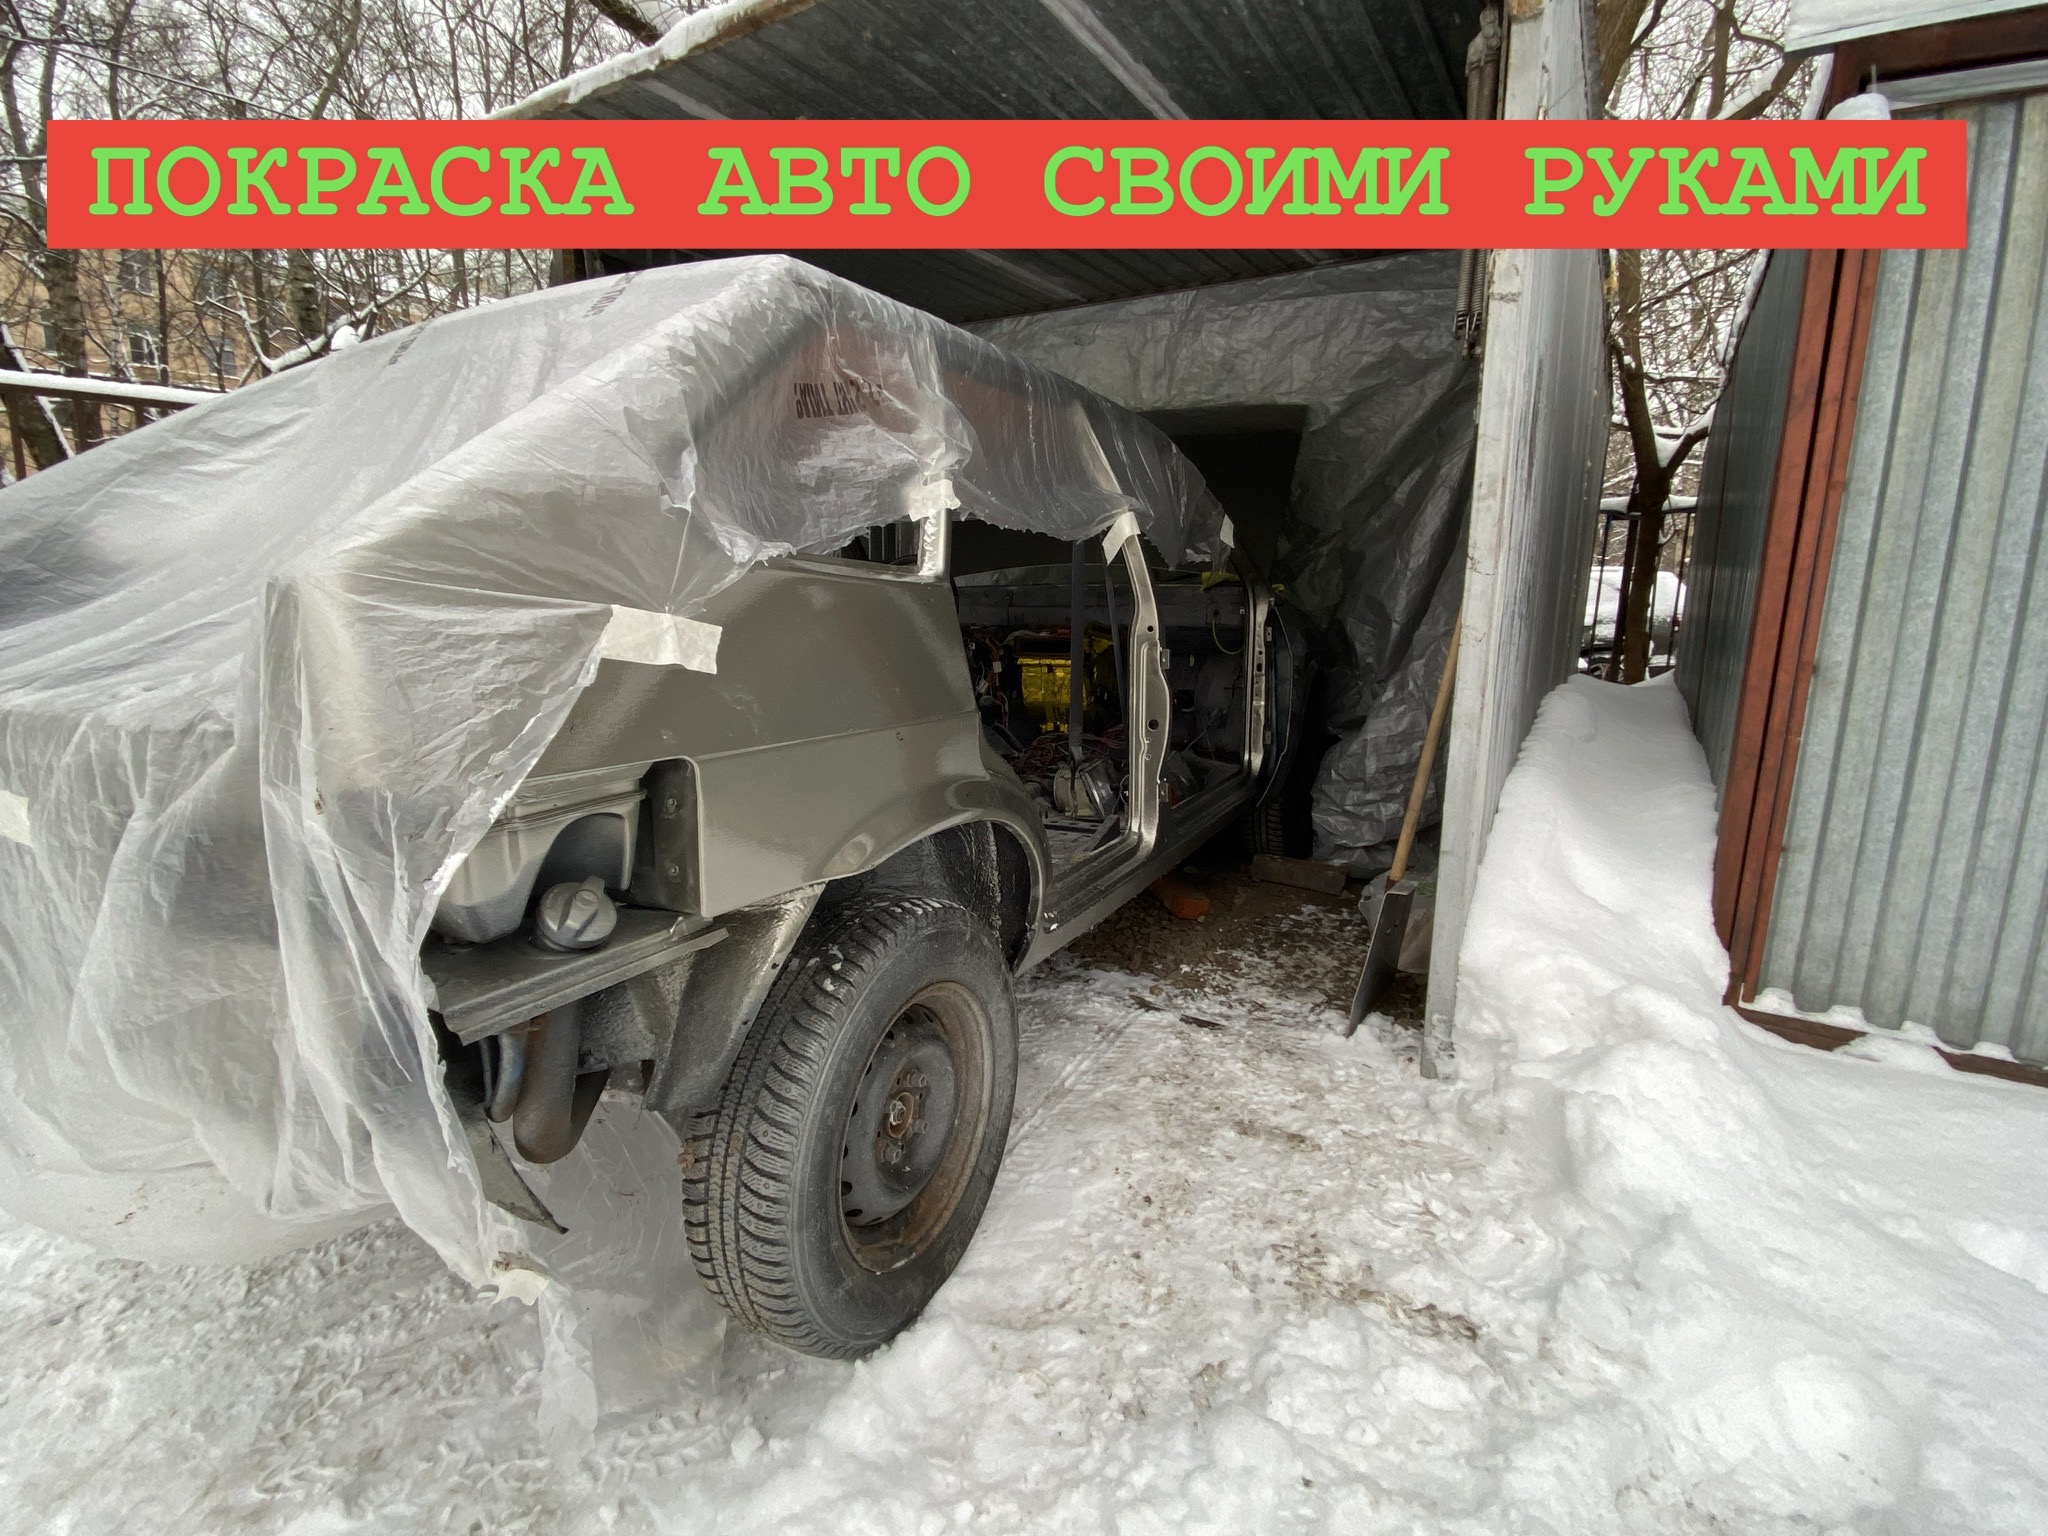 Как произвести ремонт стартера на автомобиле ВАЗ-2107 своими руками